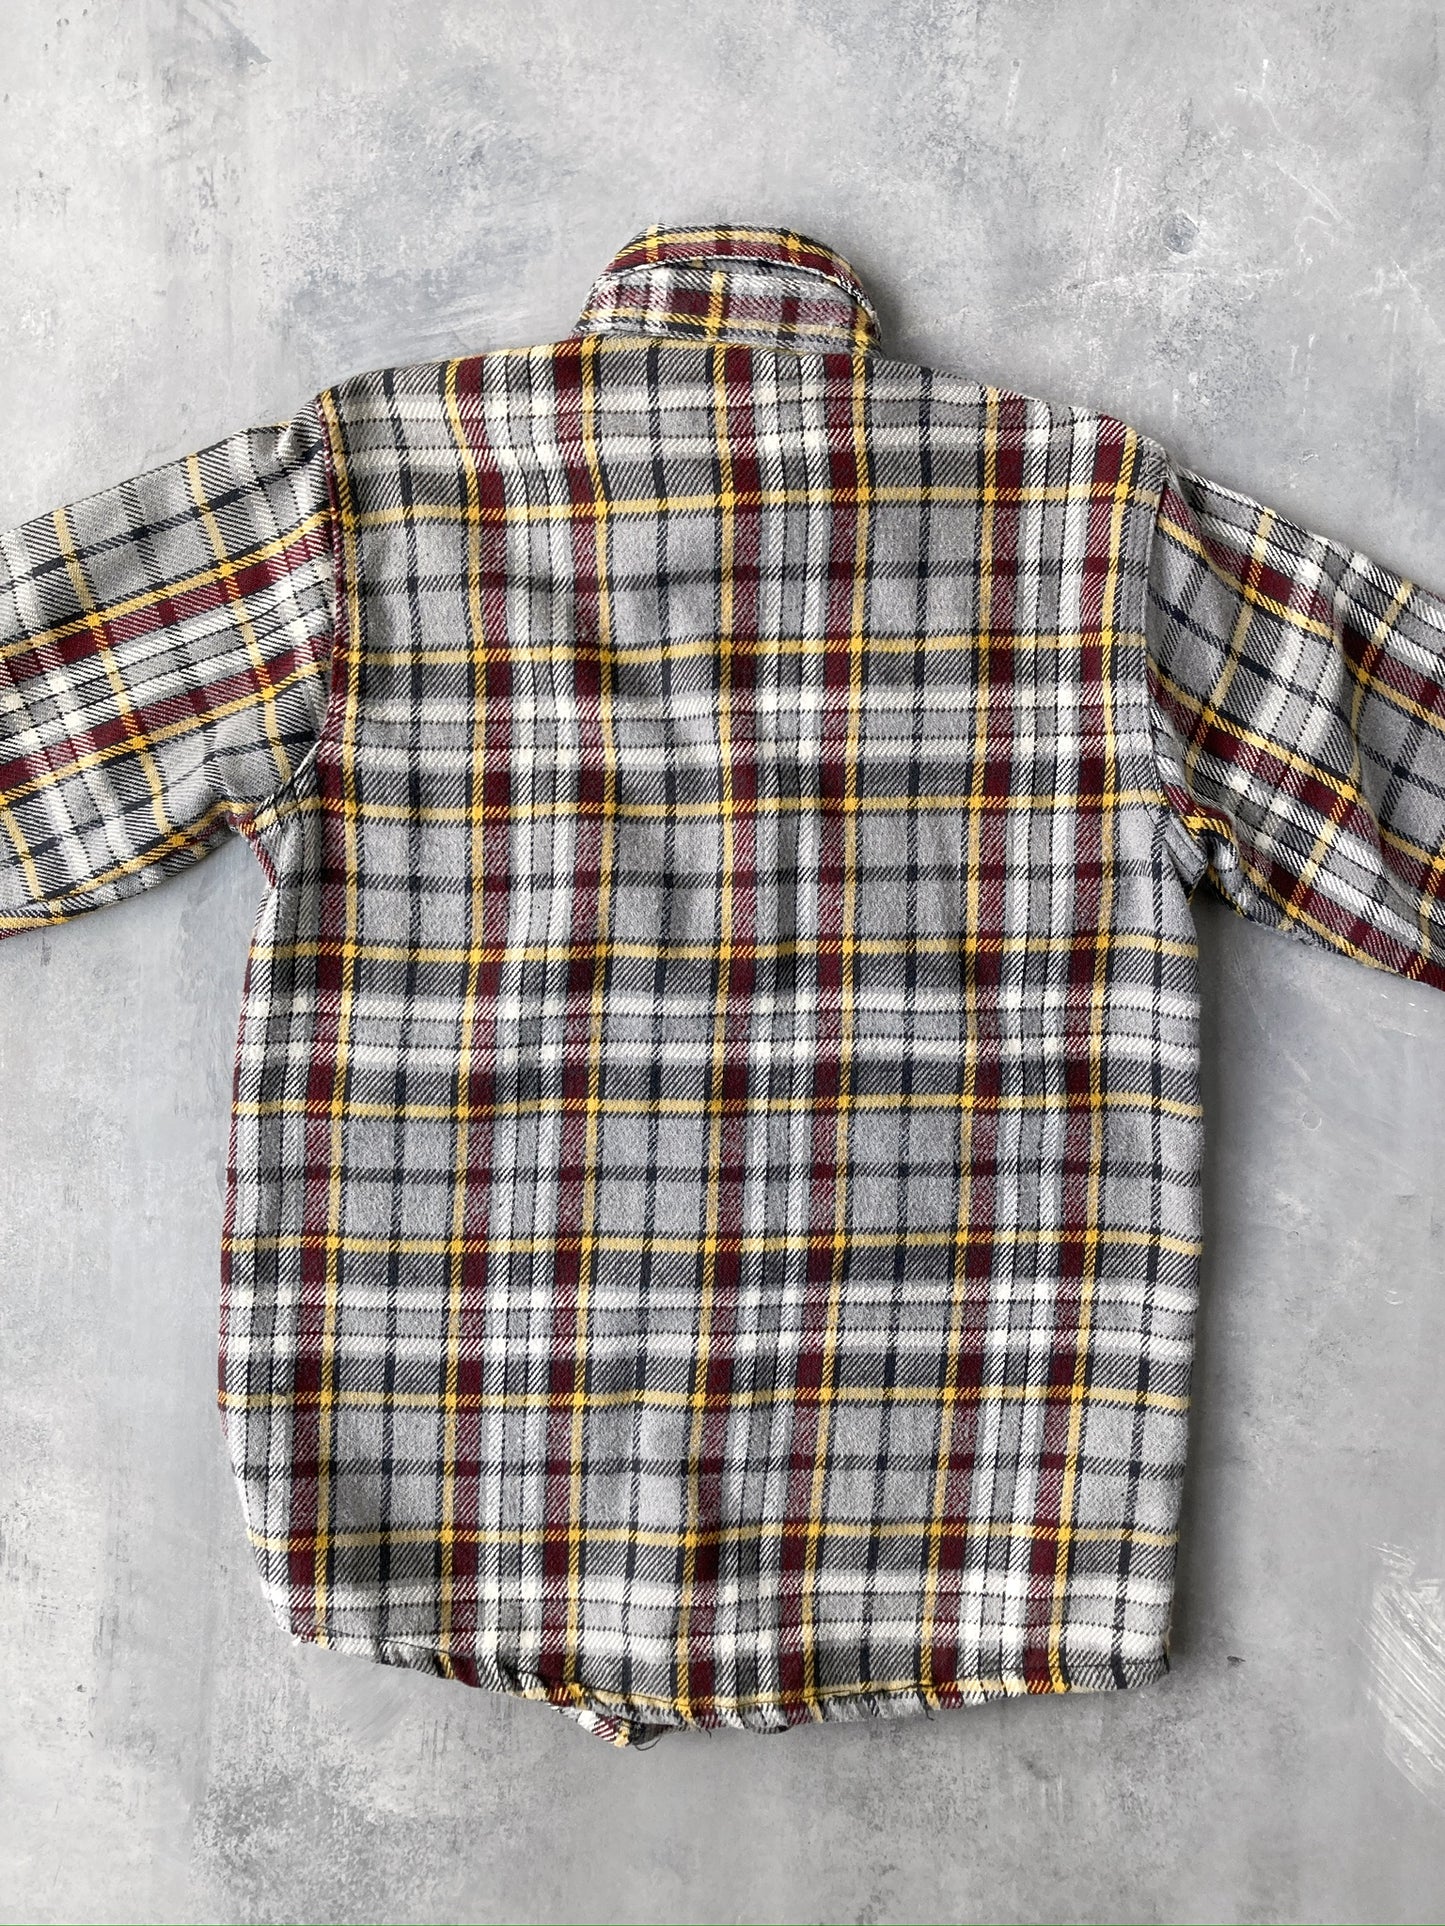 Plaid Flannel Shirt 80's - Medium